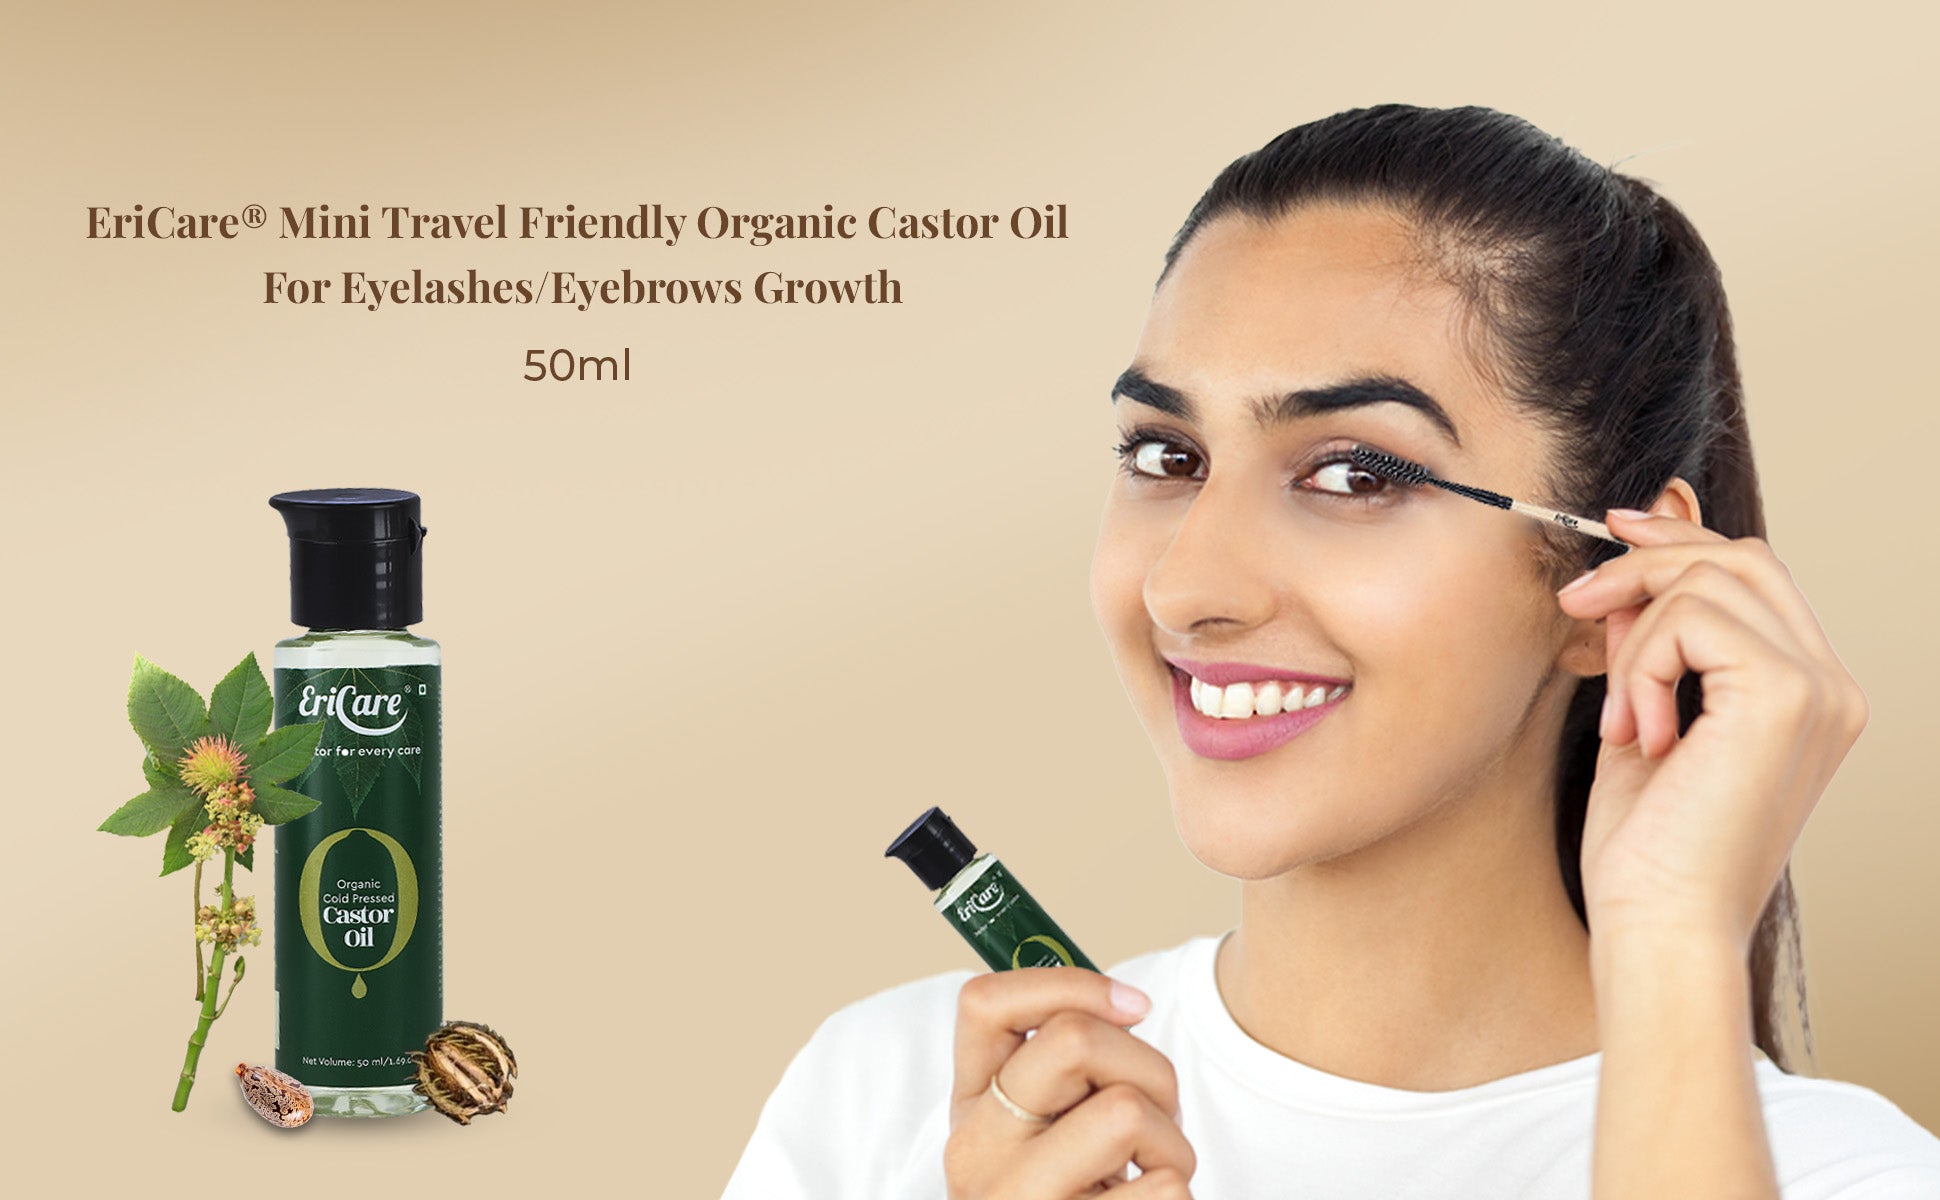 Women applying mini travel friendly organic castor oil on eyelashes and eyebrows for getting healthy fuller darker looking eyelashes/eyebrows